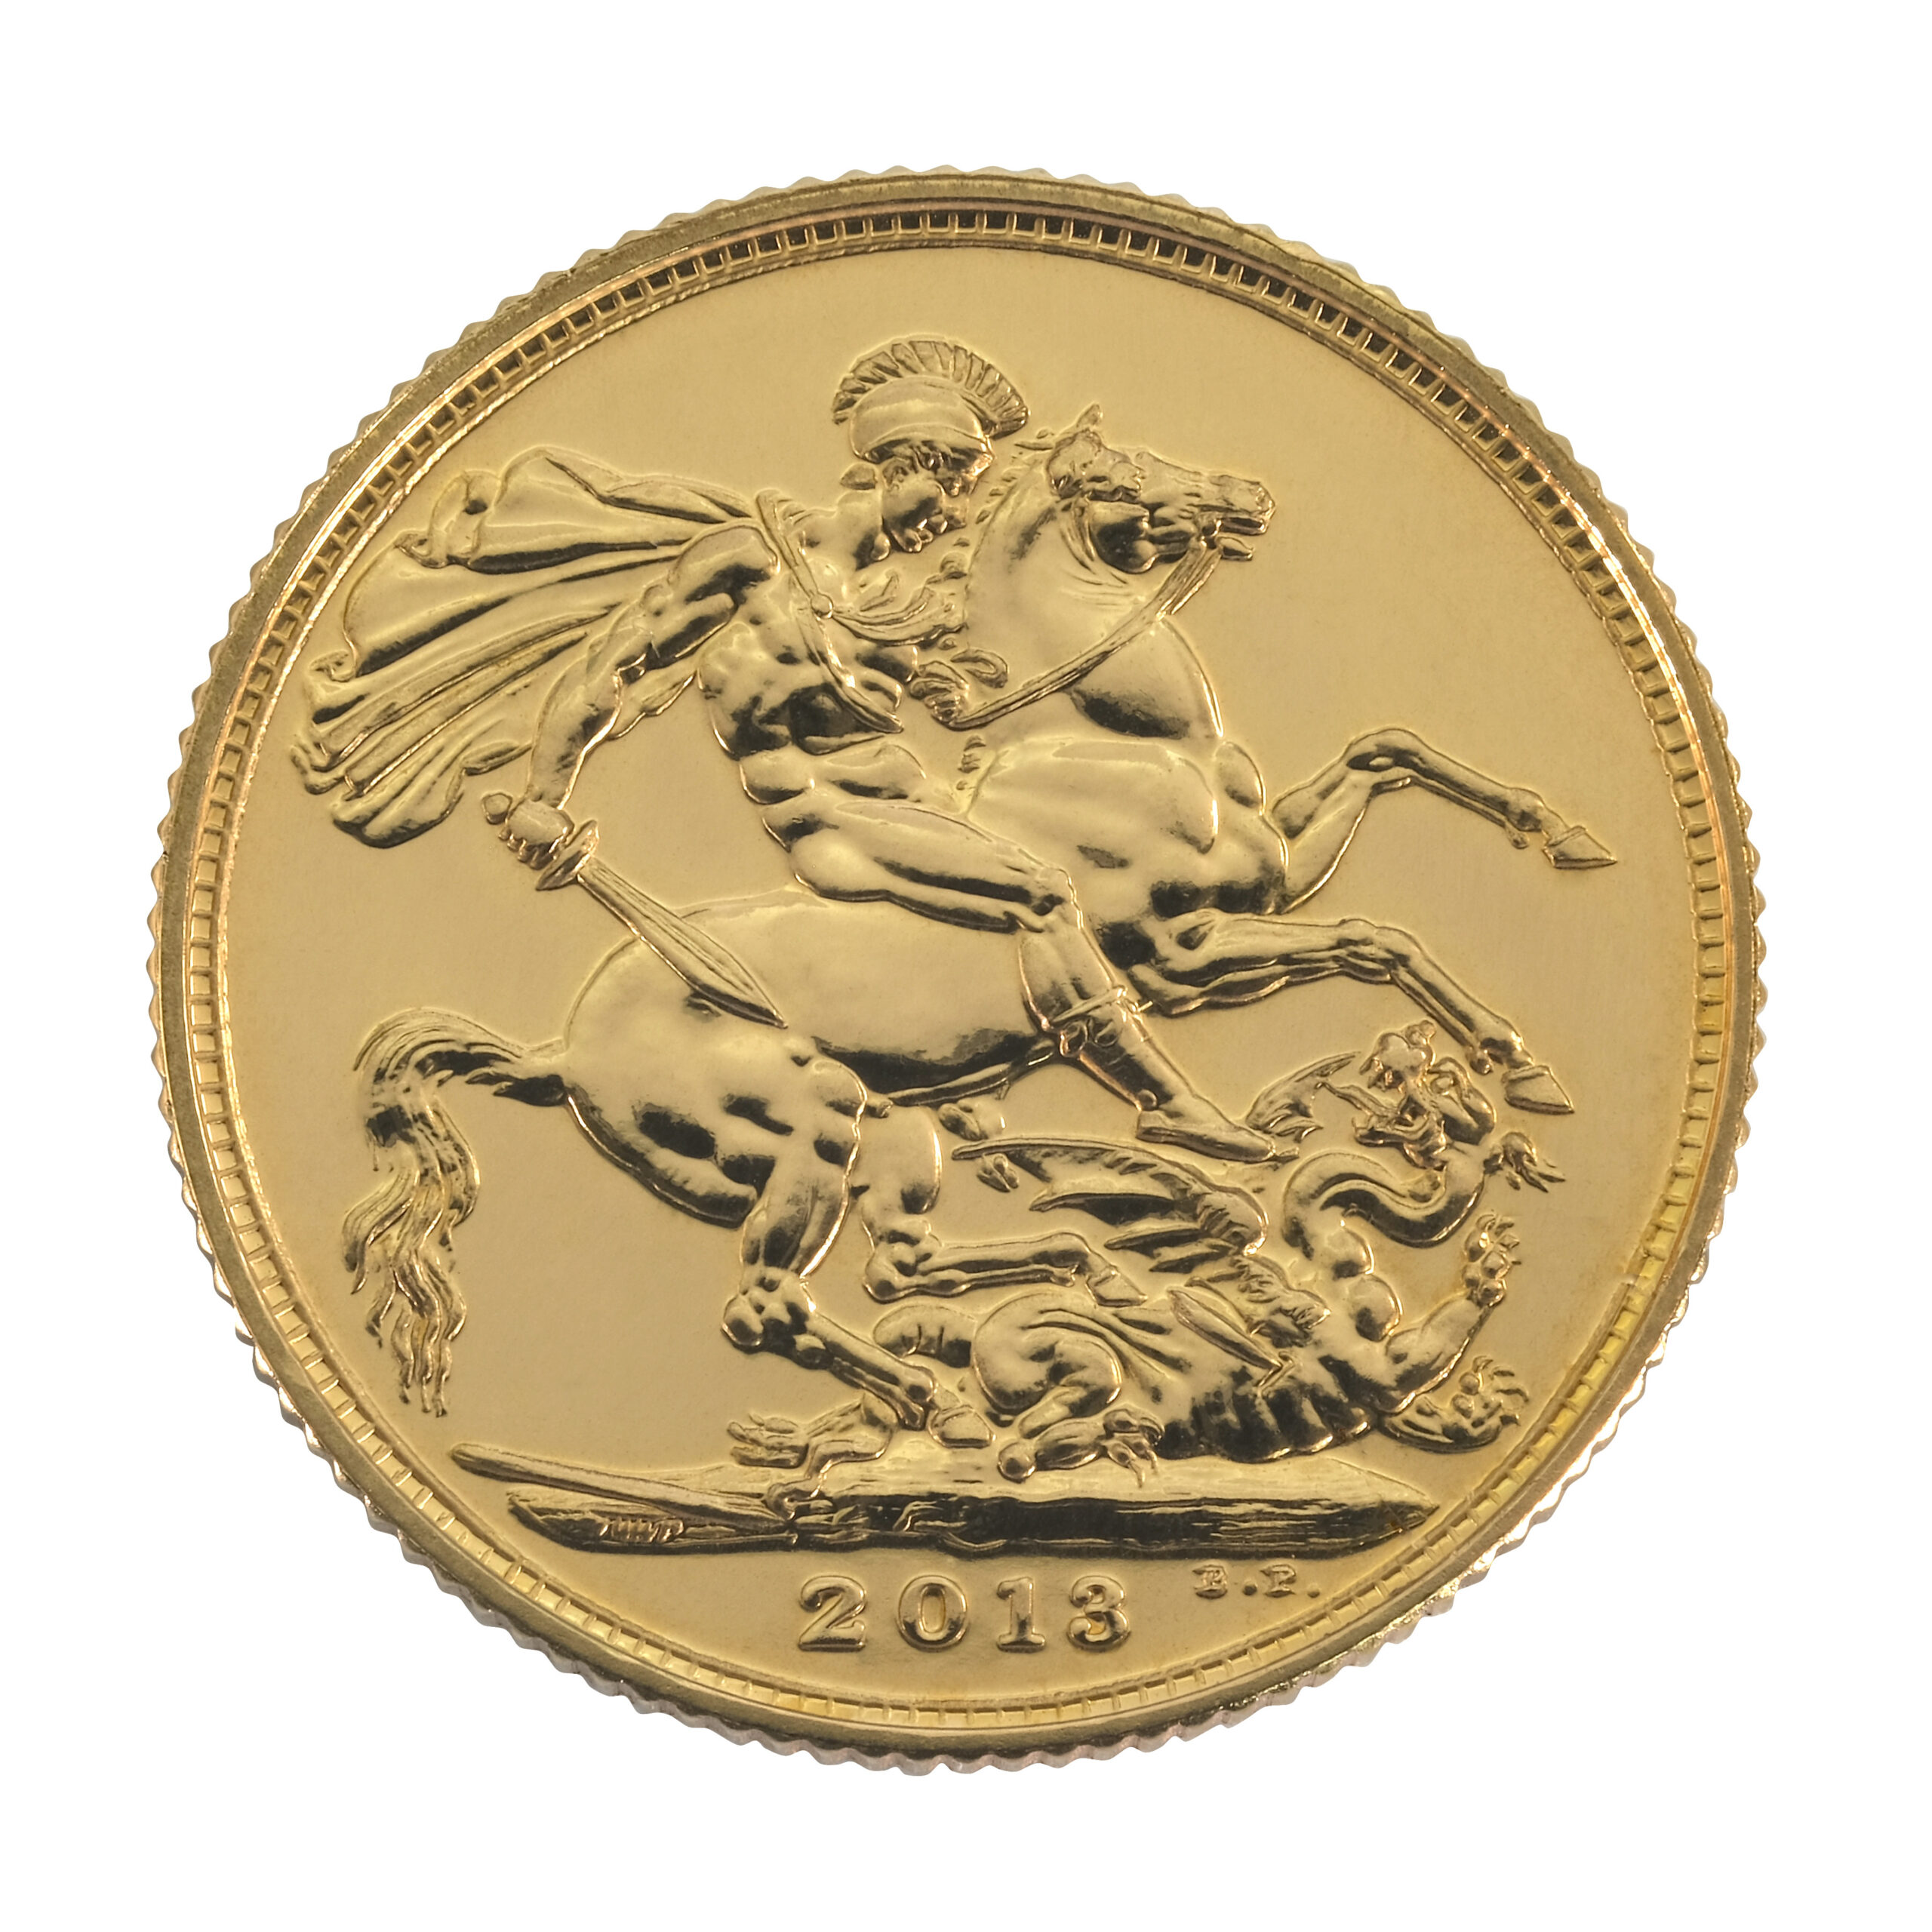 Quarter Sovereign Gold Coin (Best Value)